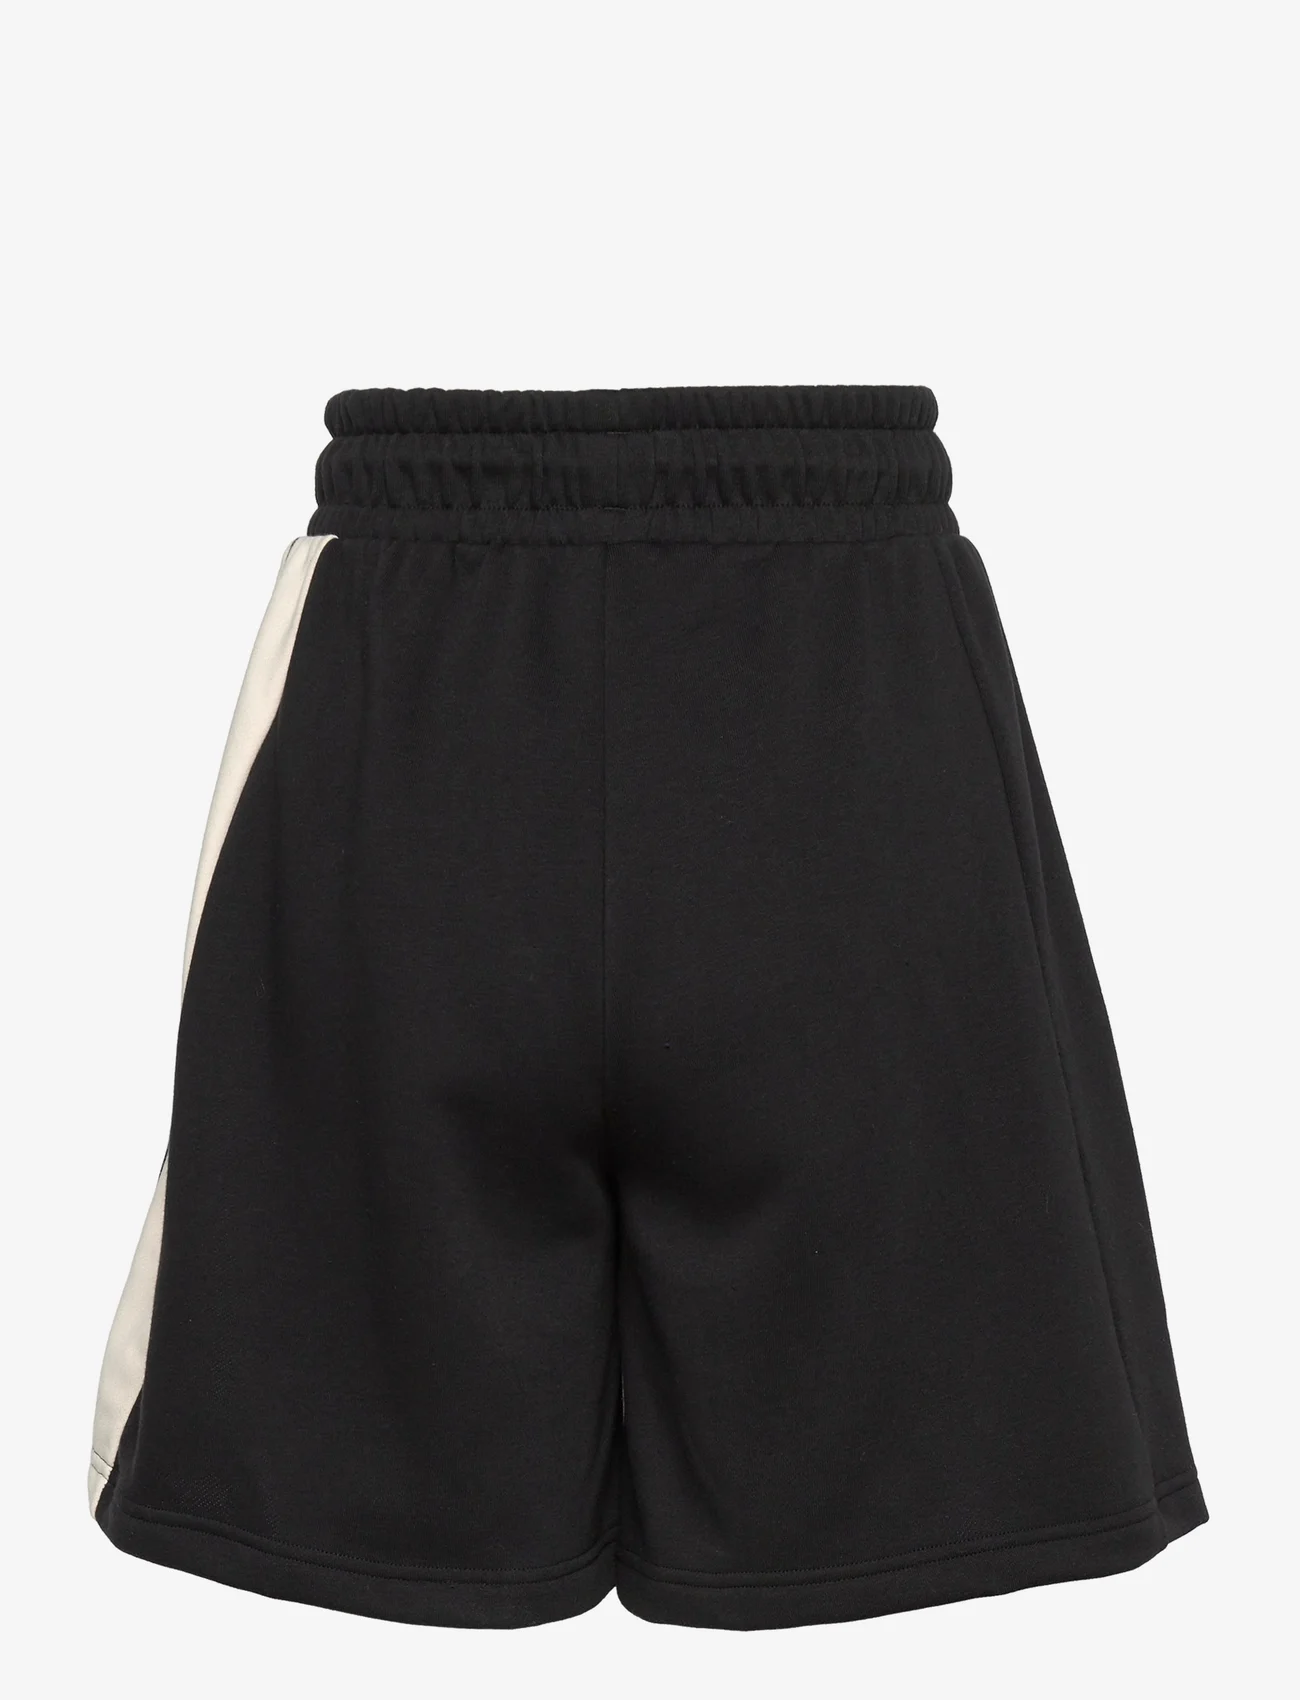 adidas Originals - Shorts - sweat shorts - black - 1